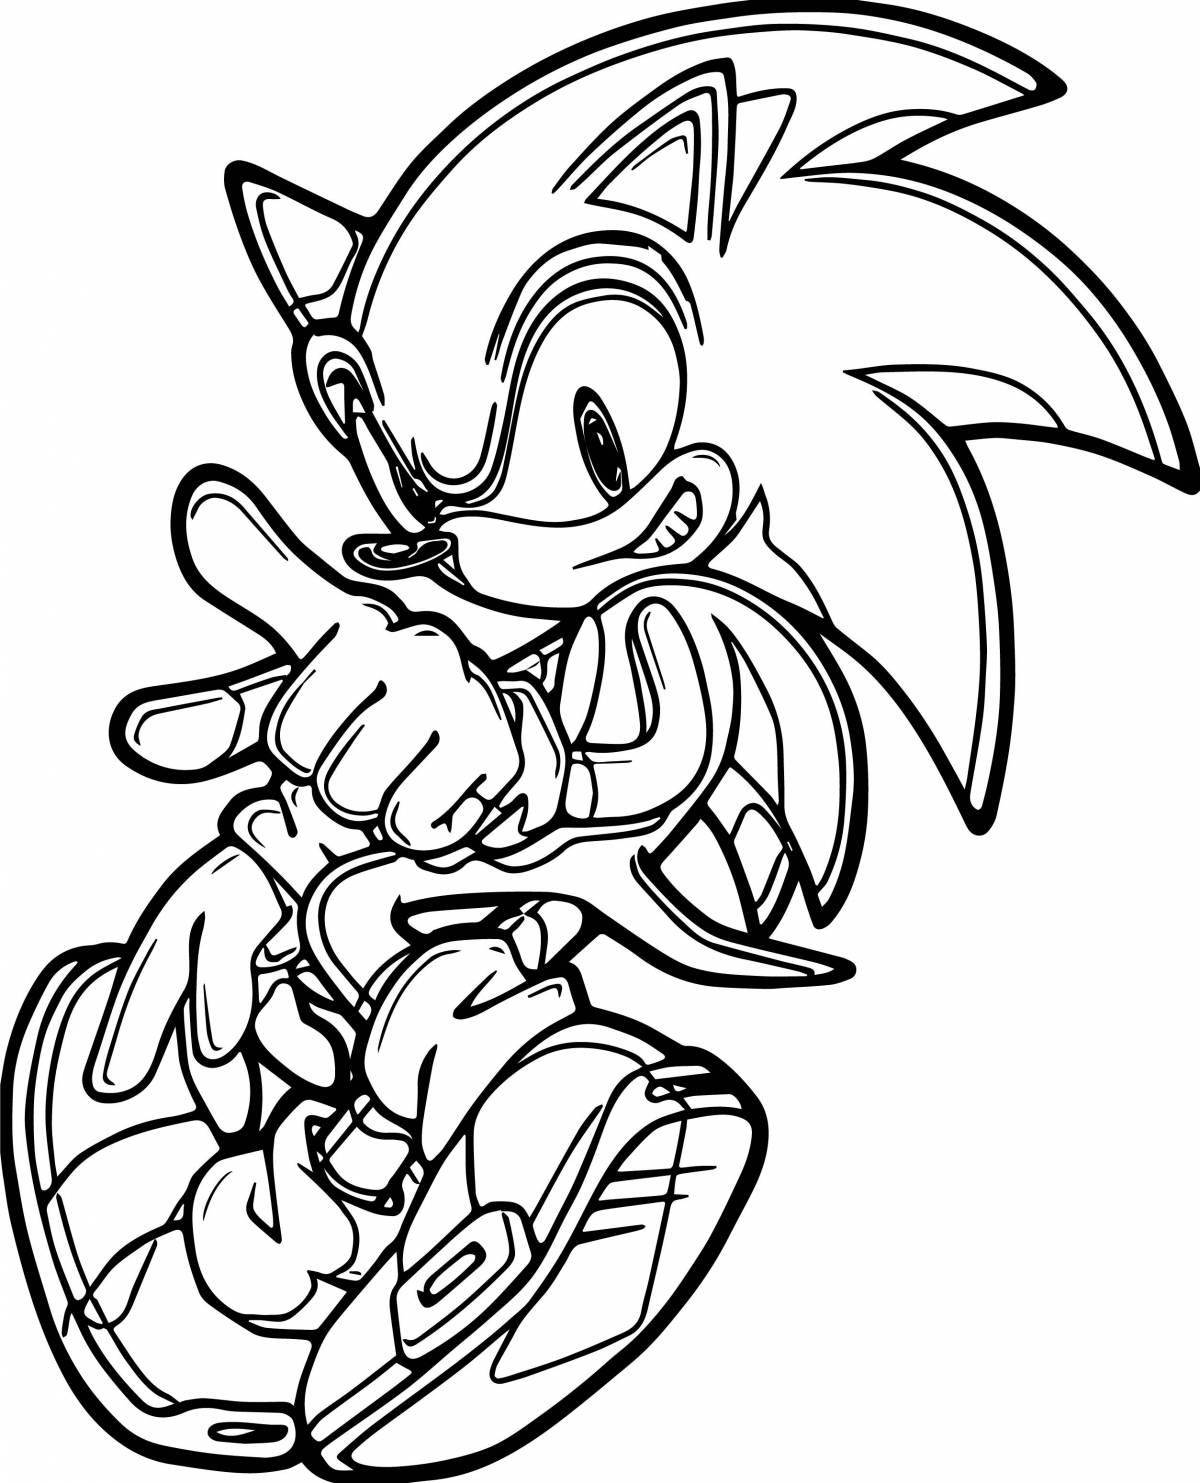 Sonic xz dynamic coloring